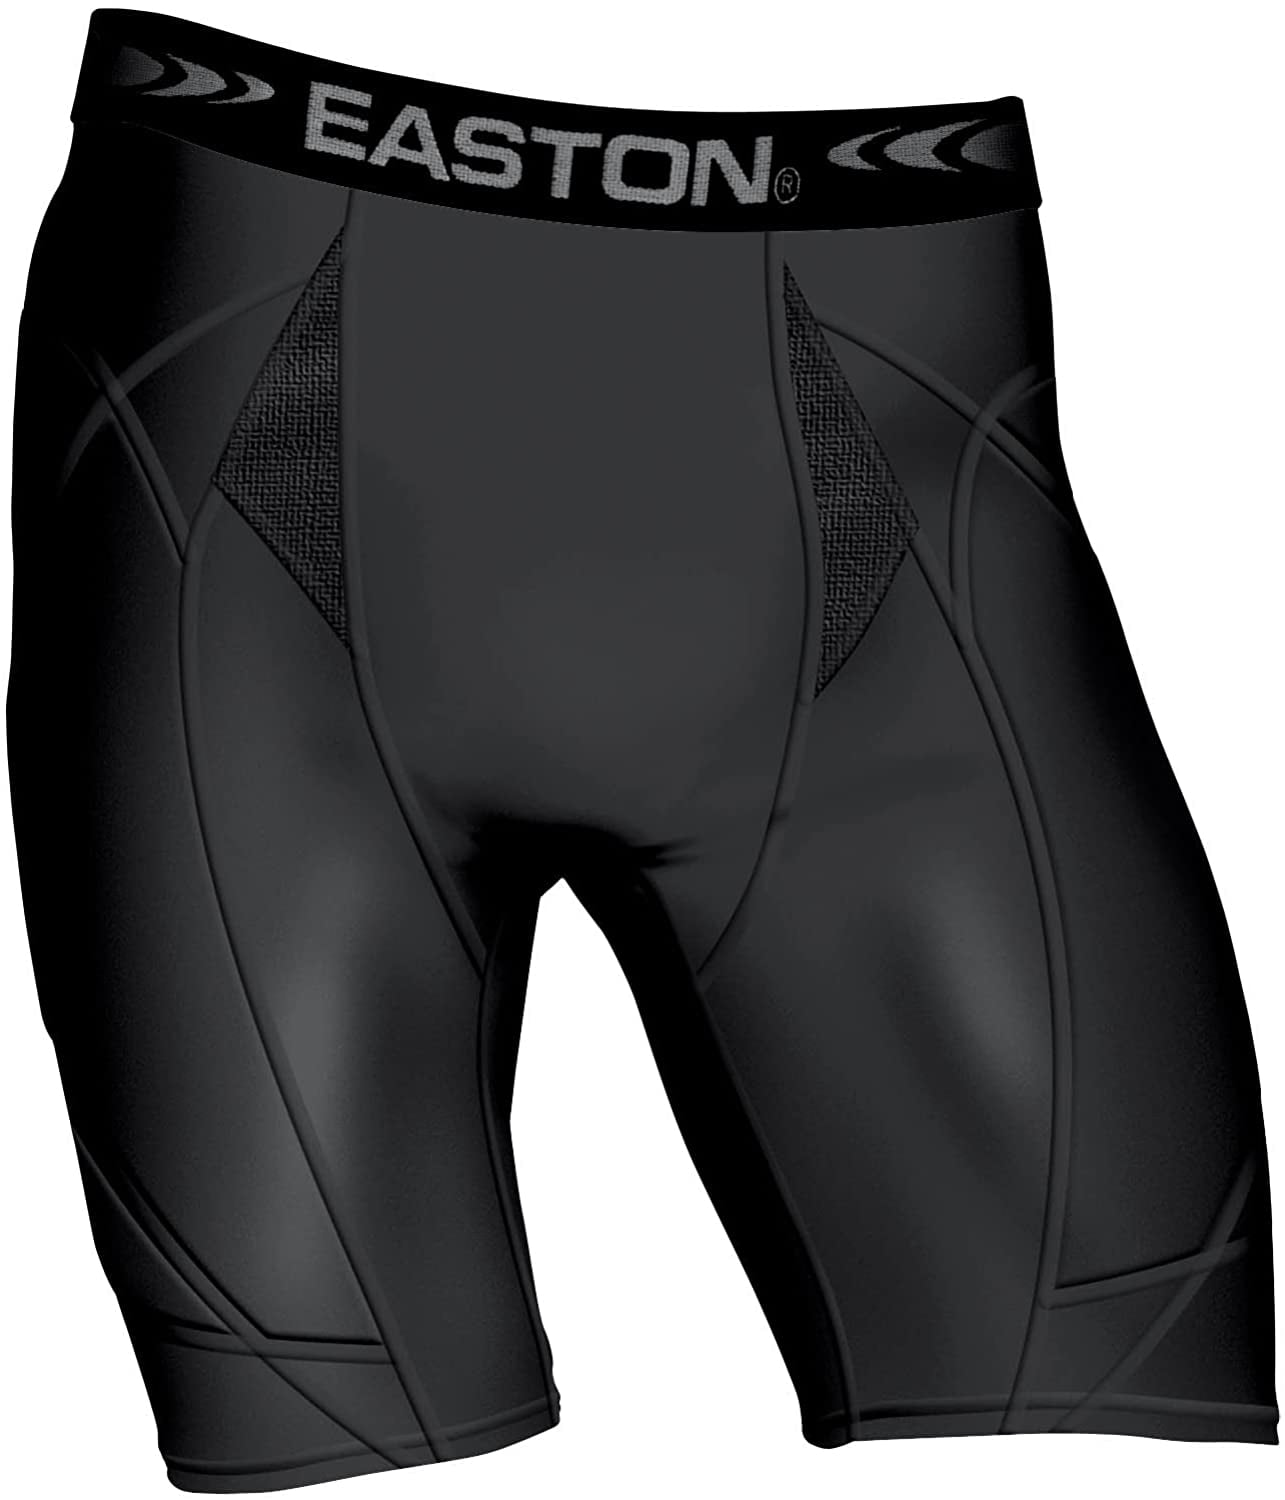 Easton Extra Protective Sliding Short